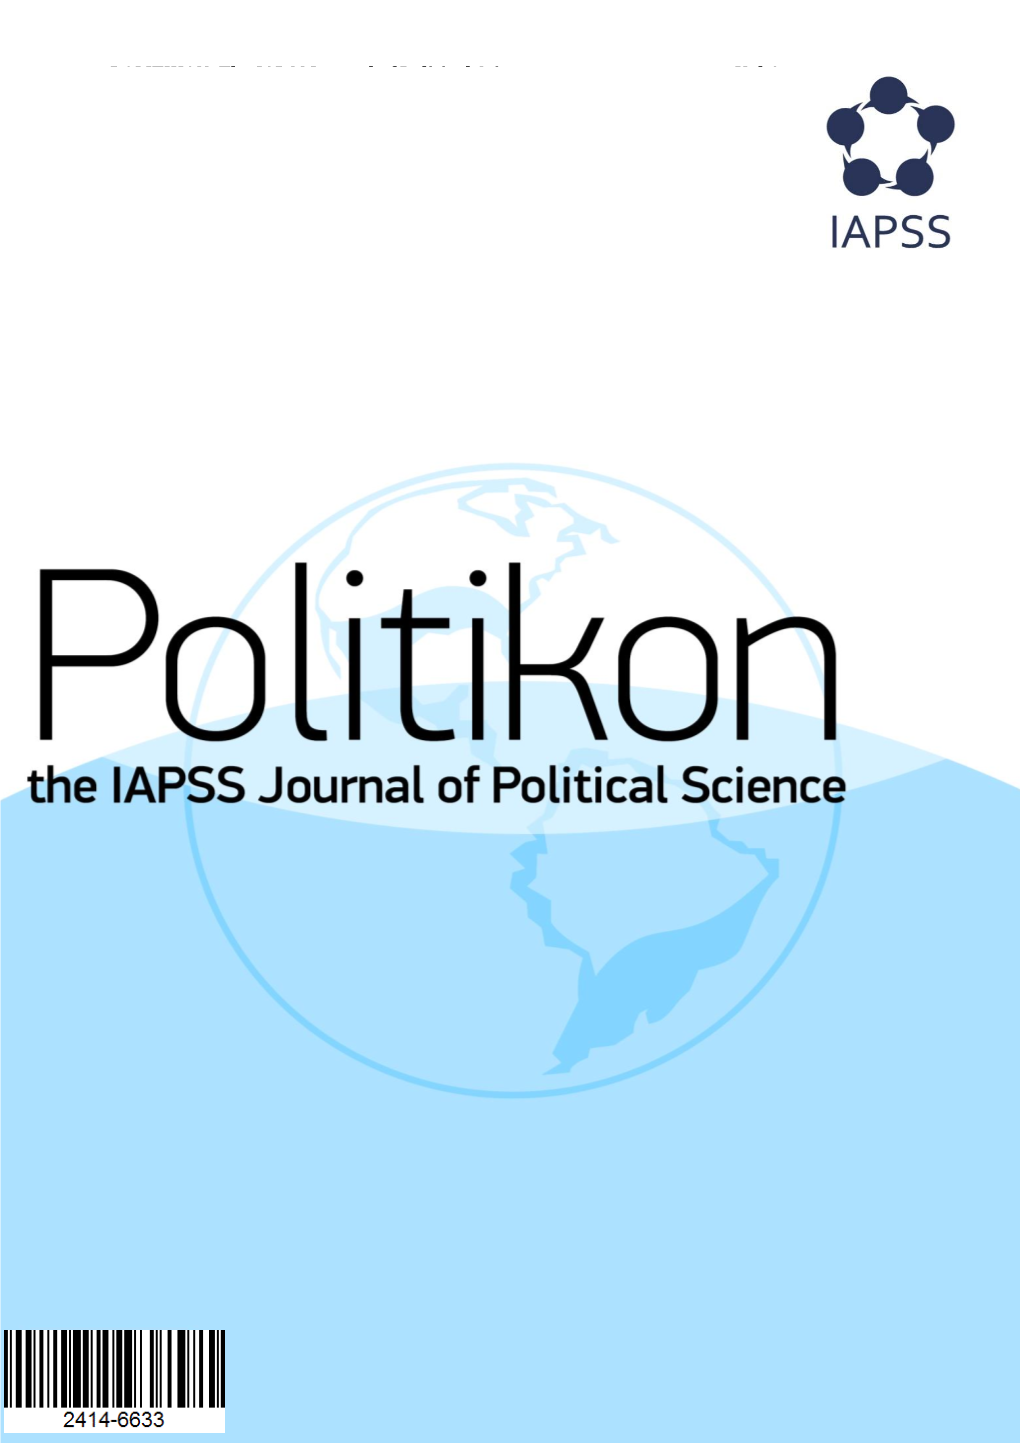 POLITIKON: the IAPSS Journal of Political Science Vol 41 (June 2019)